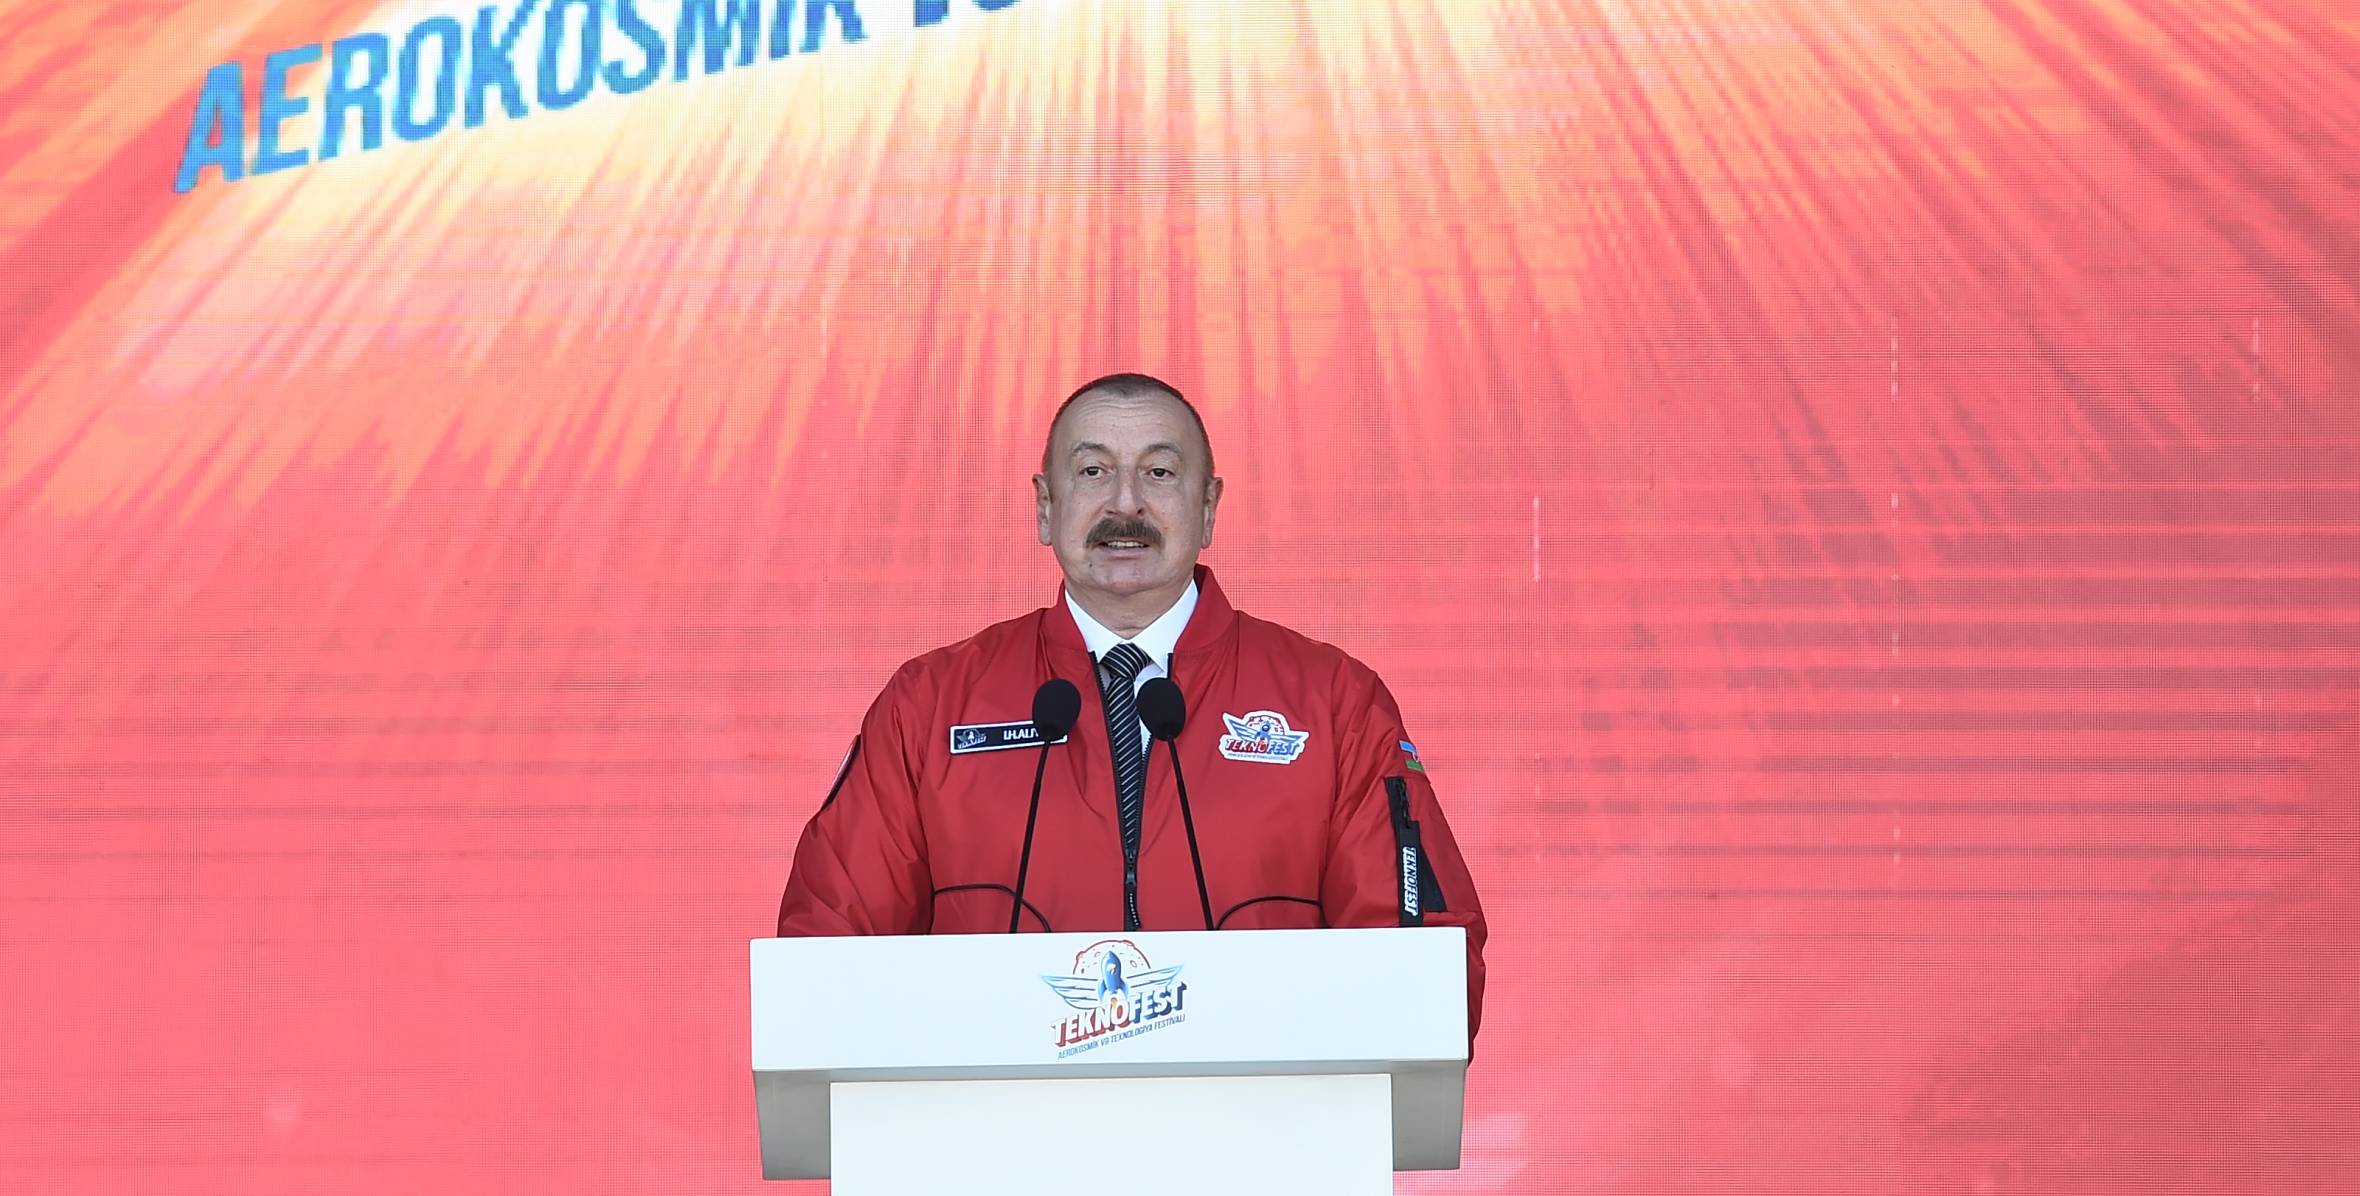 Ilham Aliyev and Recep Tayyip Erdogan attended TEKNOFEST Azerbaijan Festival in Baku